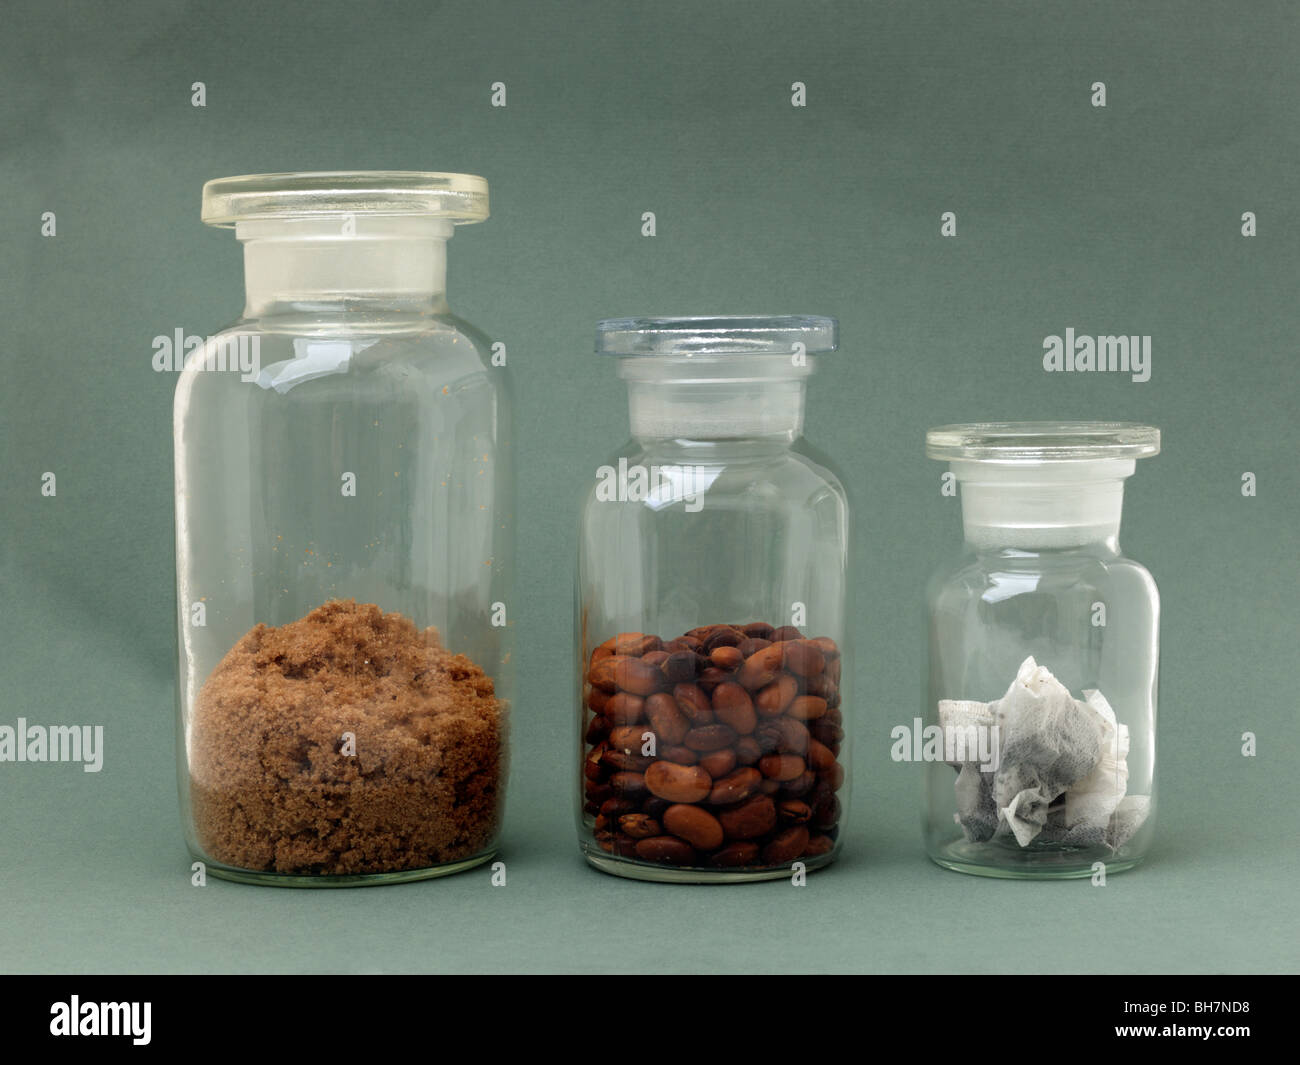 https://c8.alamy.com/comp/BH7ND8/three-glass-storage-jars-with-beans-tea-bags-and-brown-sugar-BH7ND8.jpg